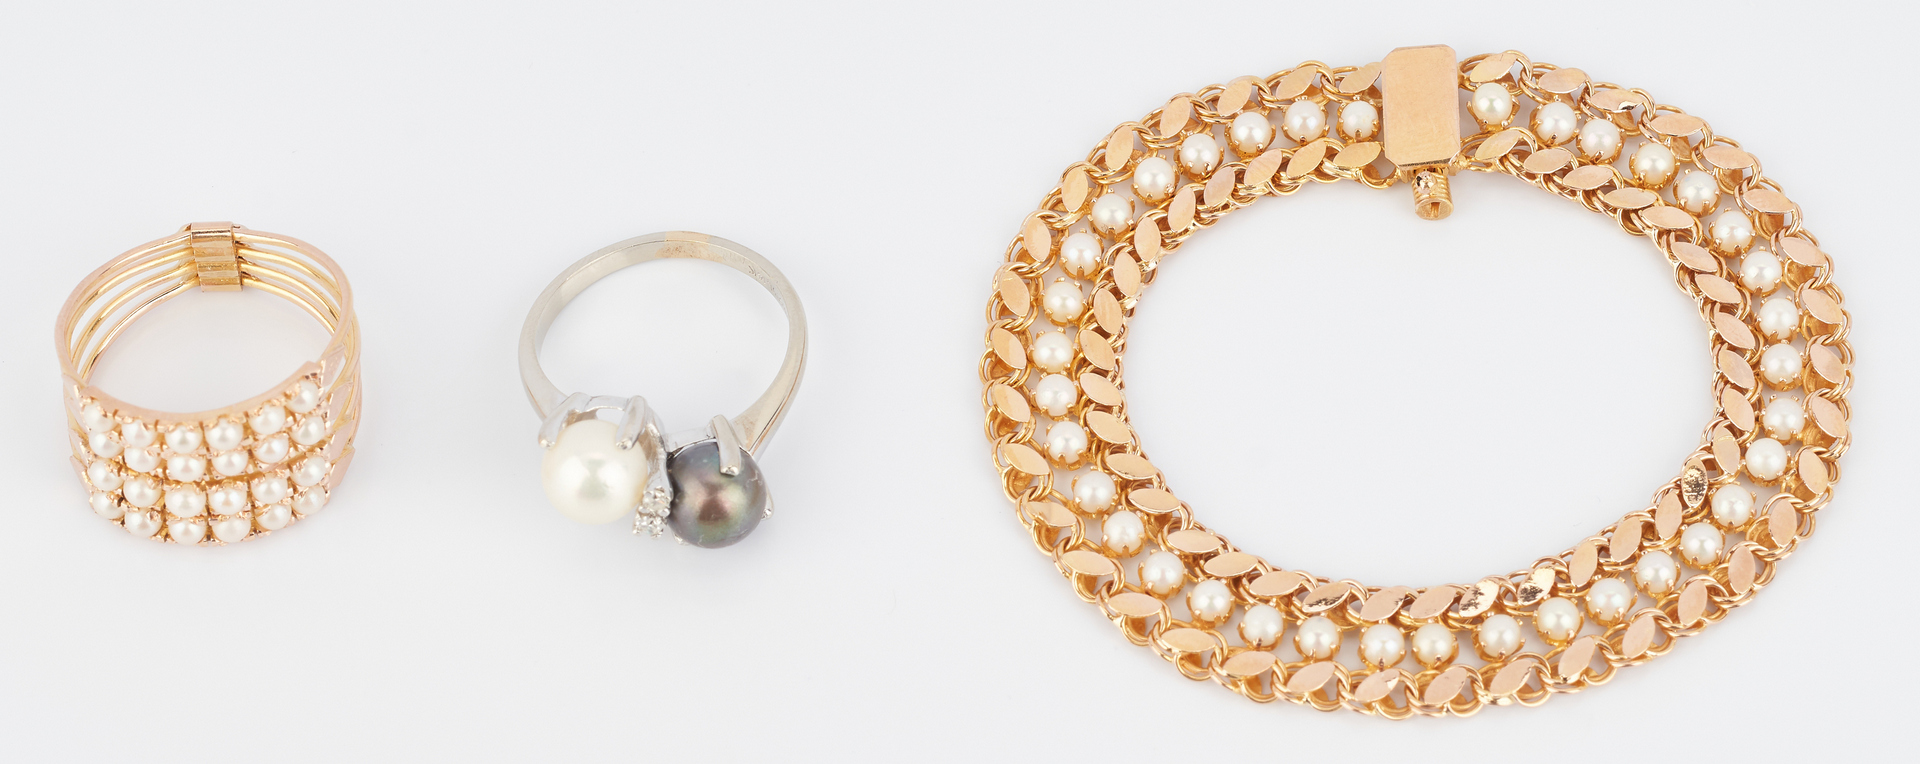 Lot 854: 3 Ladies Pearl & Gold Jewelry Items